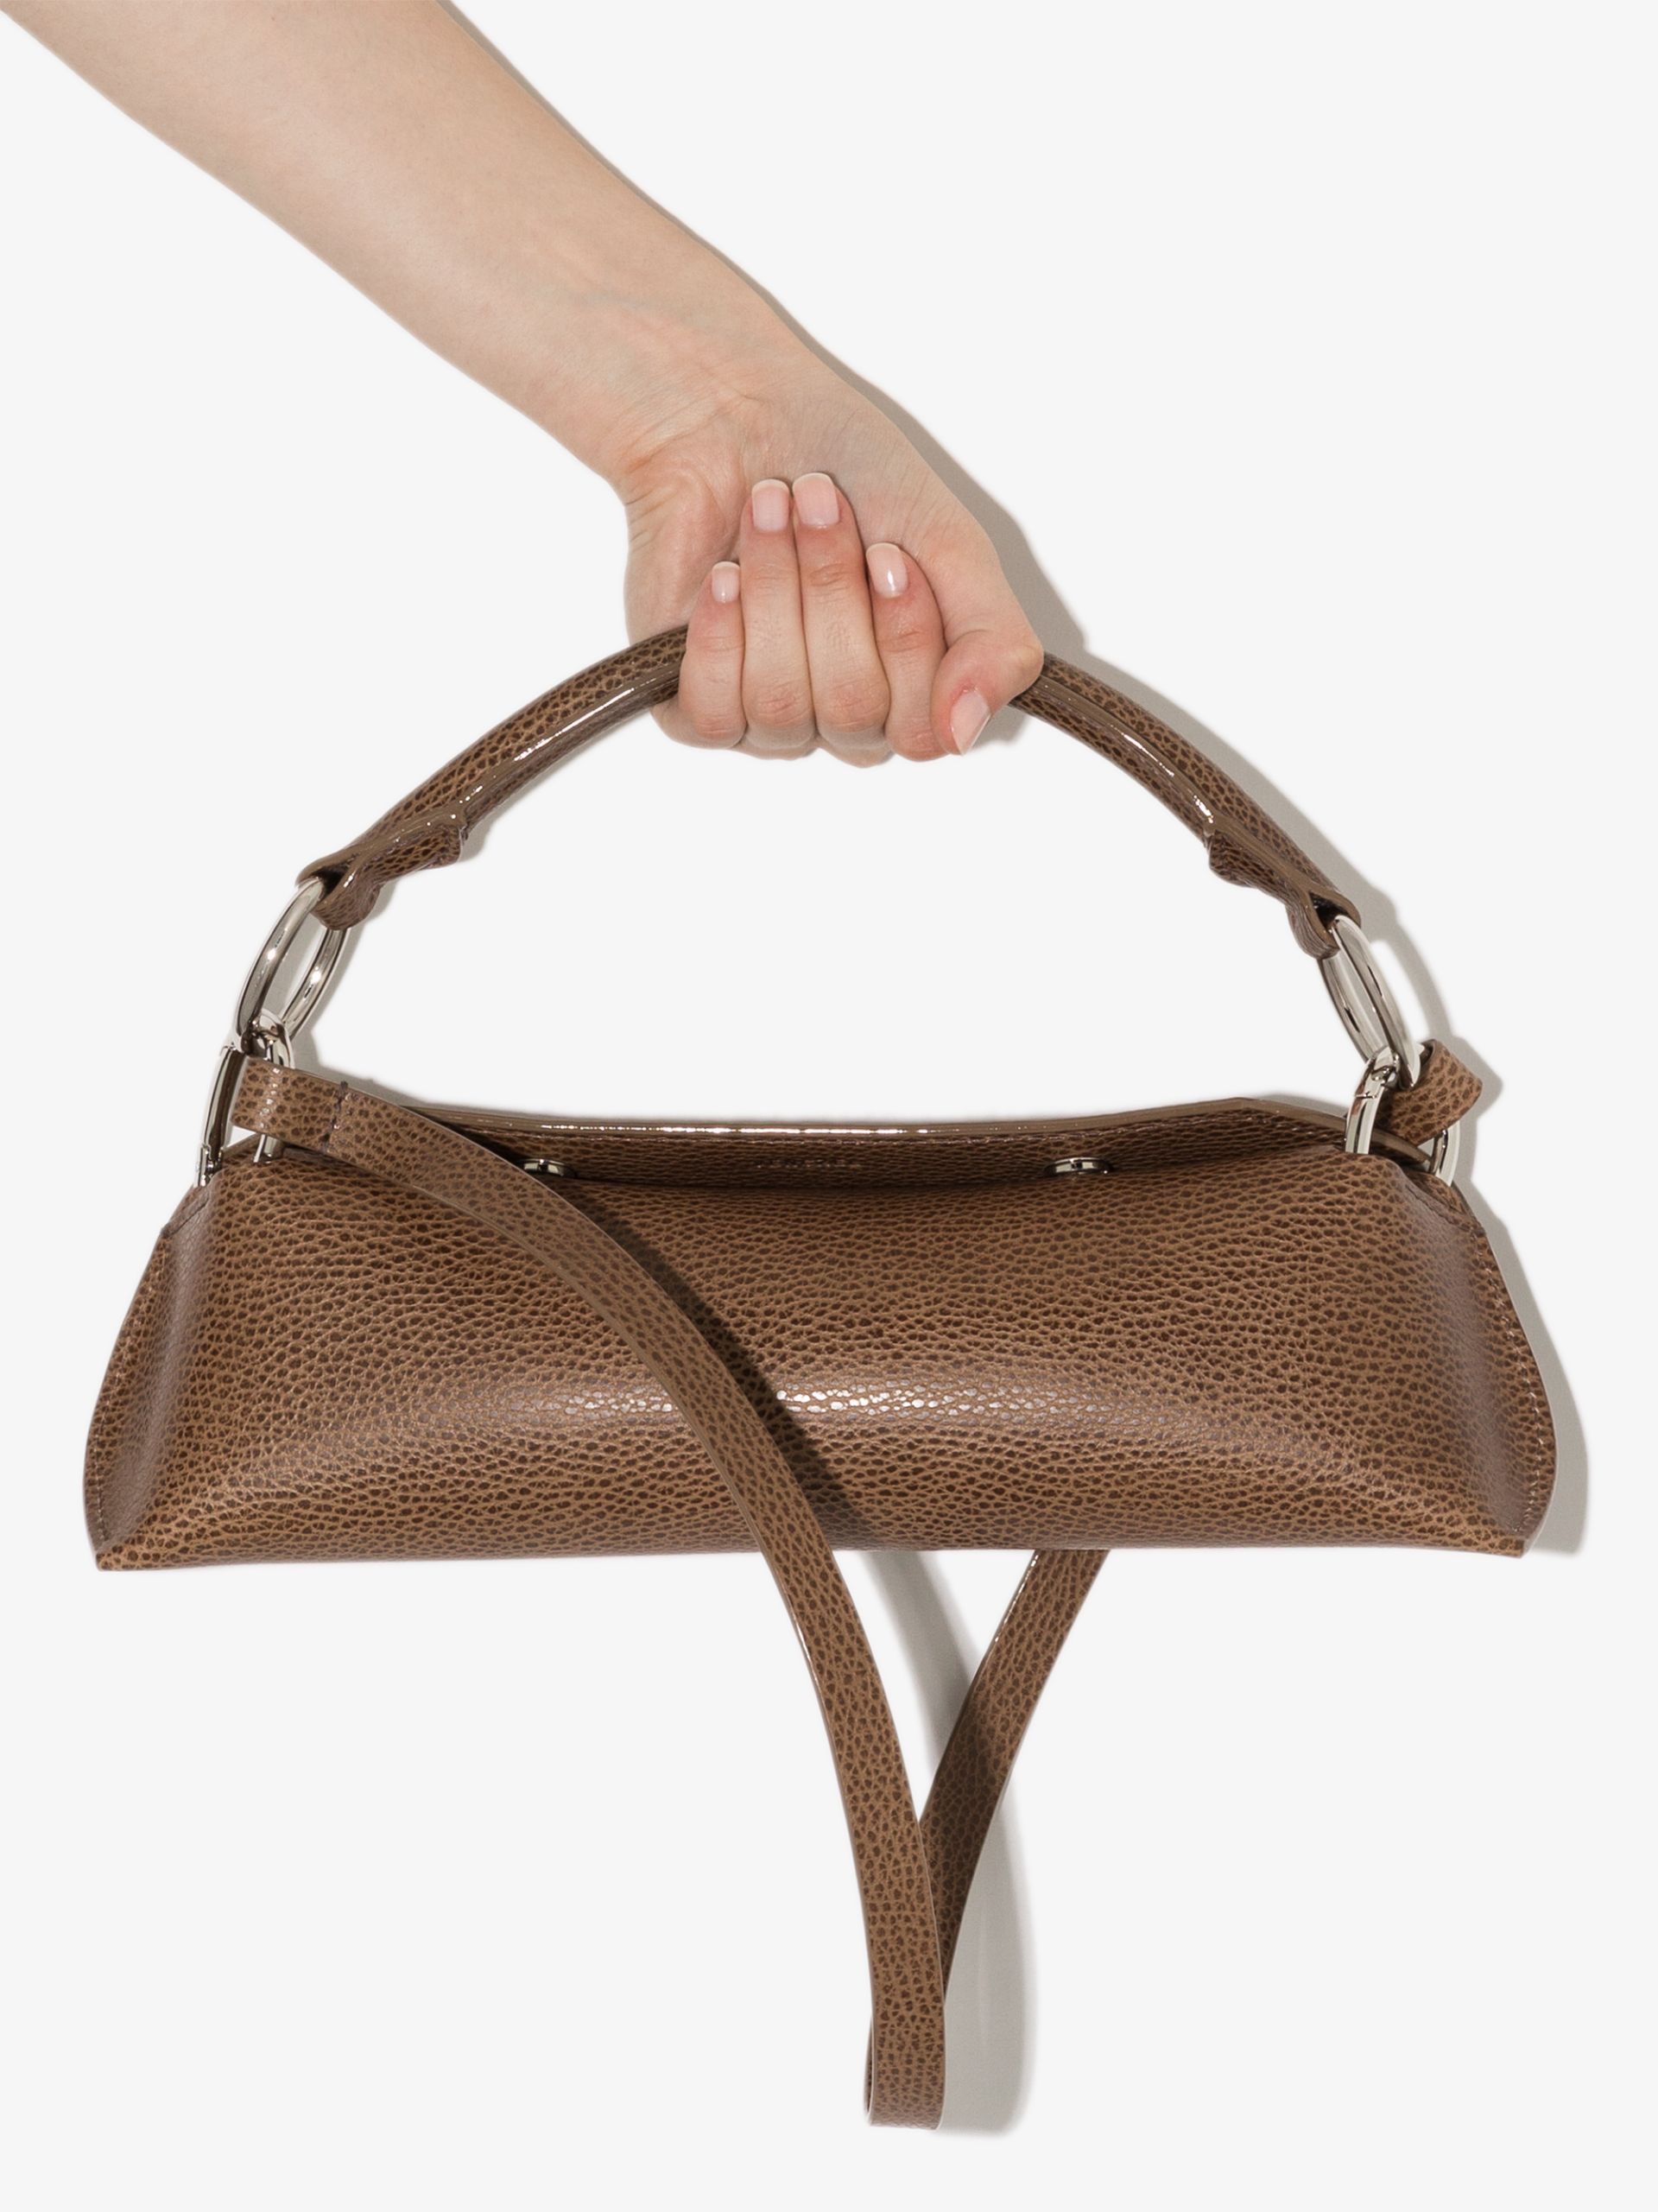 Jessie Patent Leather Structured Shoulder Handbag Women Evening Party Satchel Crossbody Top Handle Bags